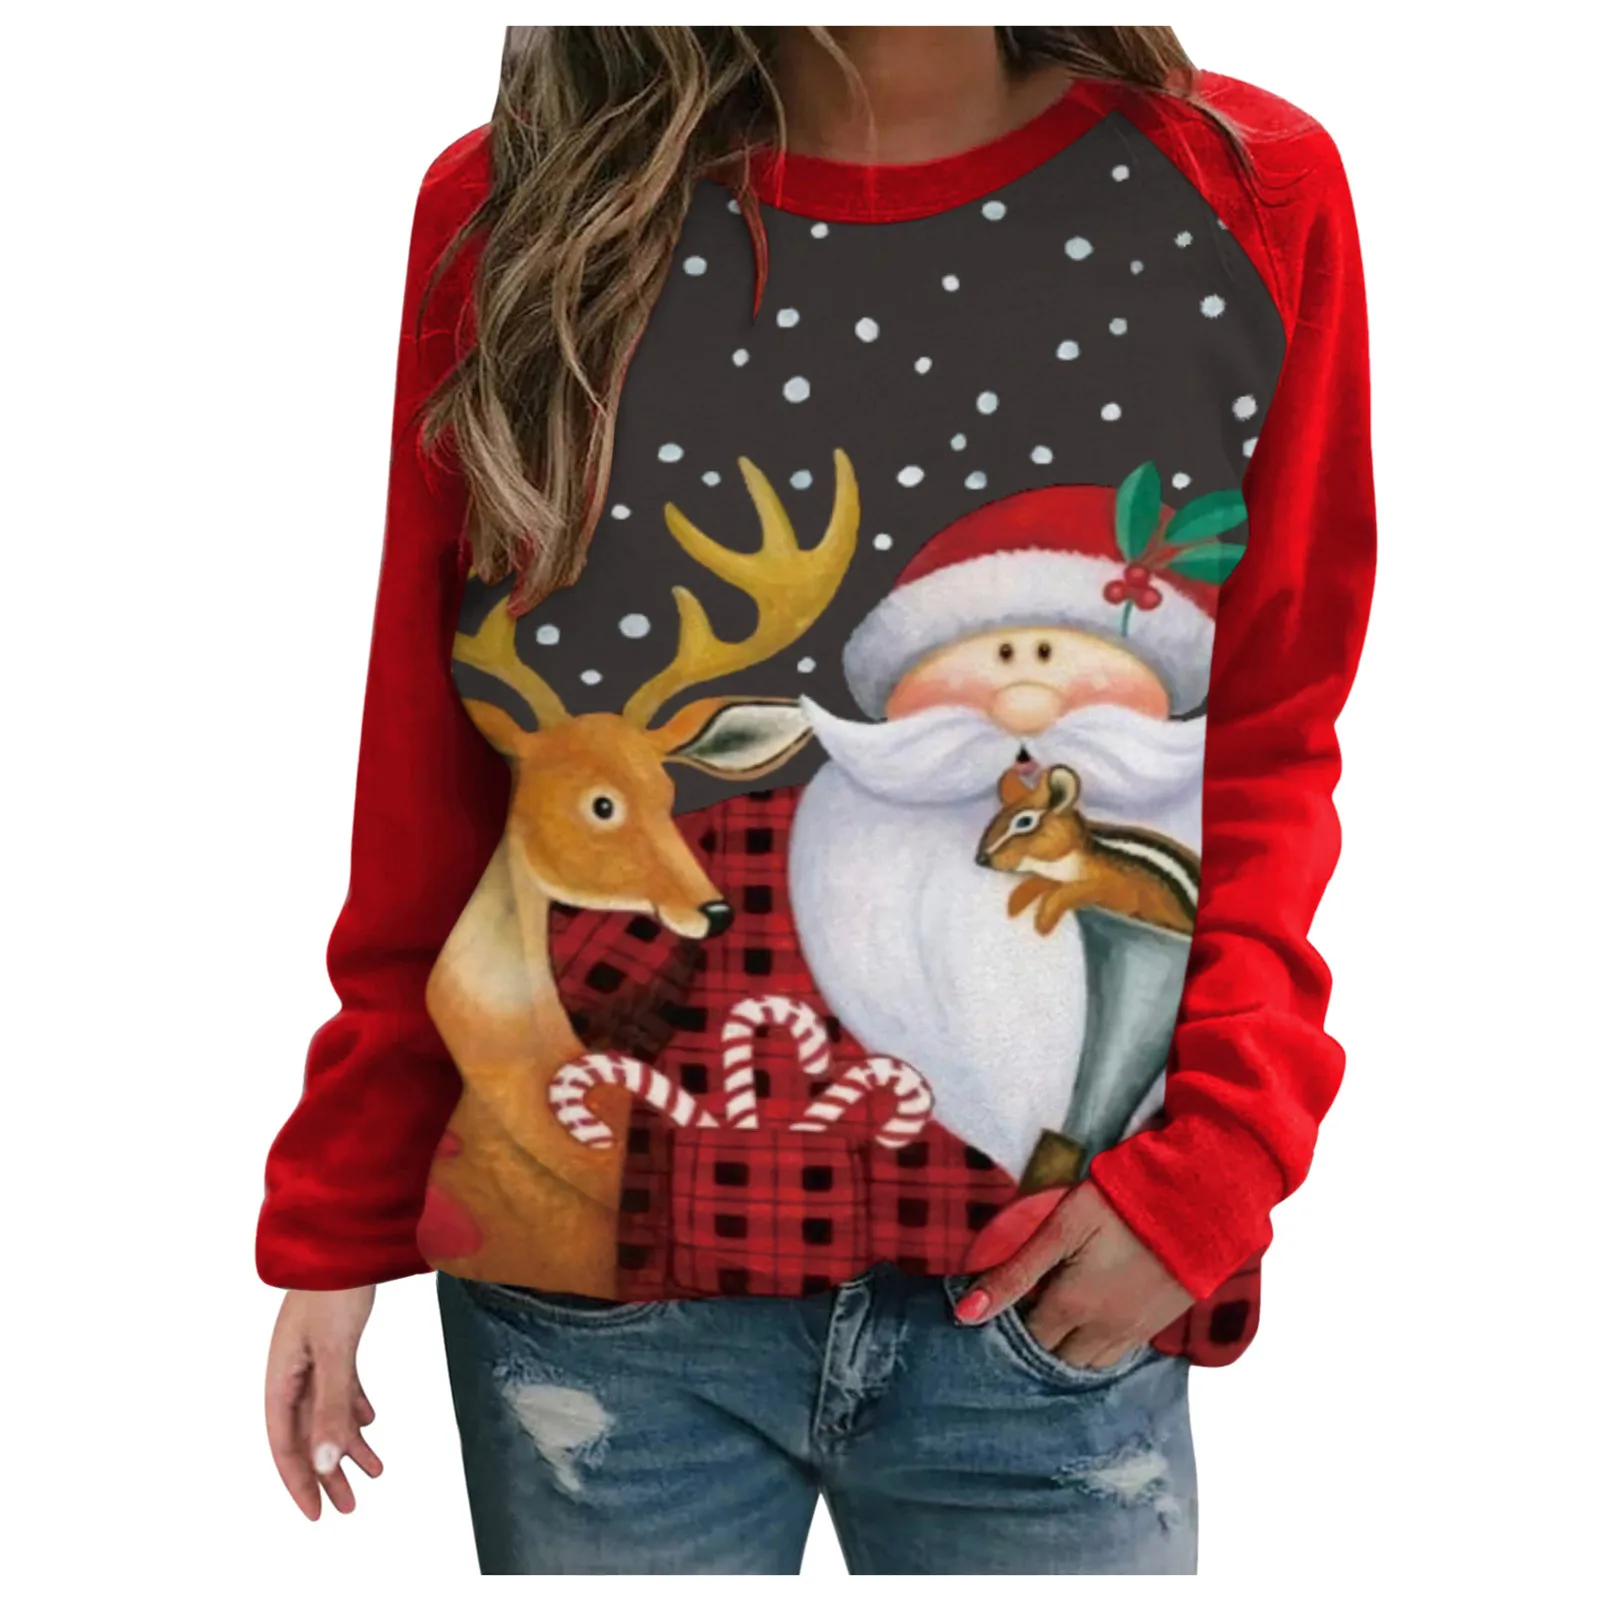 Women Hoodies Kimloog 3D Print Long Sleeve Christmas Santa Snowman Ugly Drawstring Sweatshirts Pullover S, Green